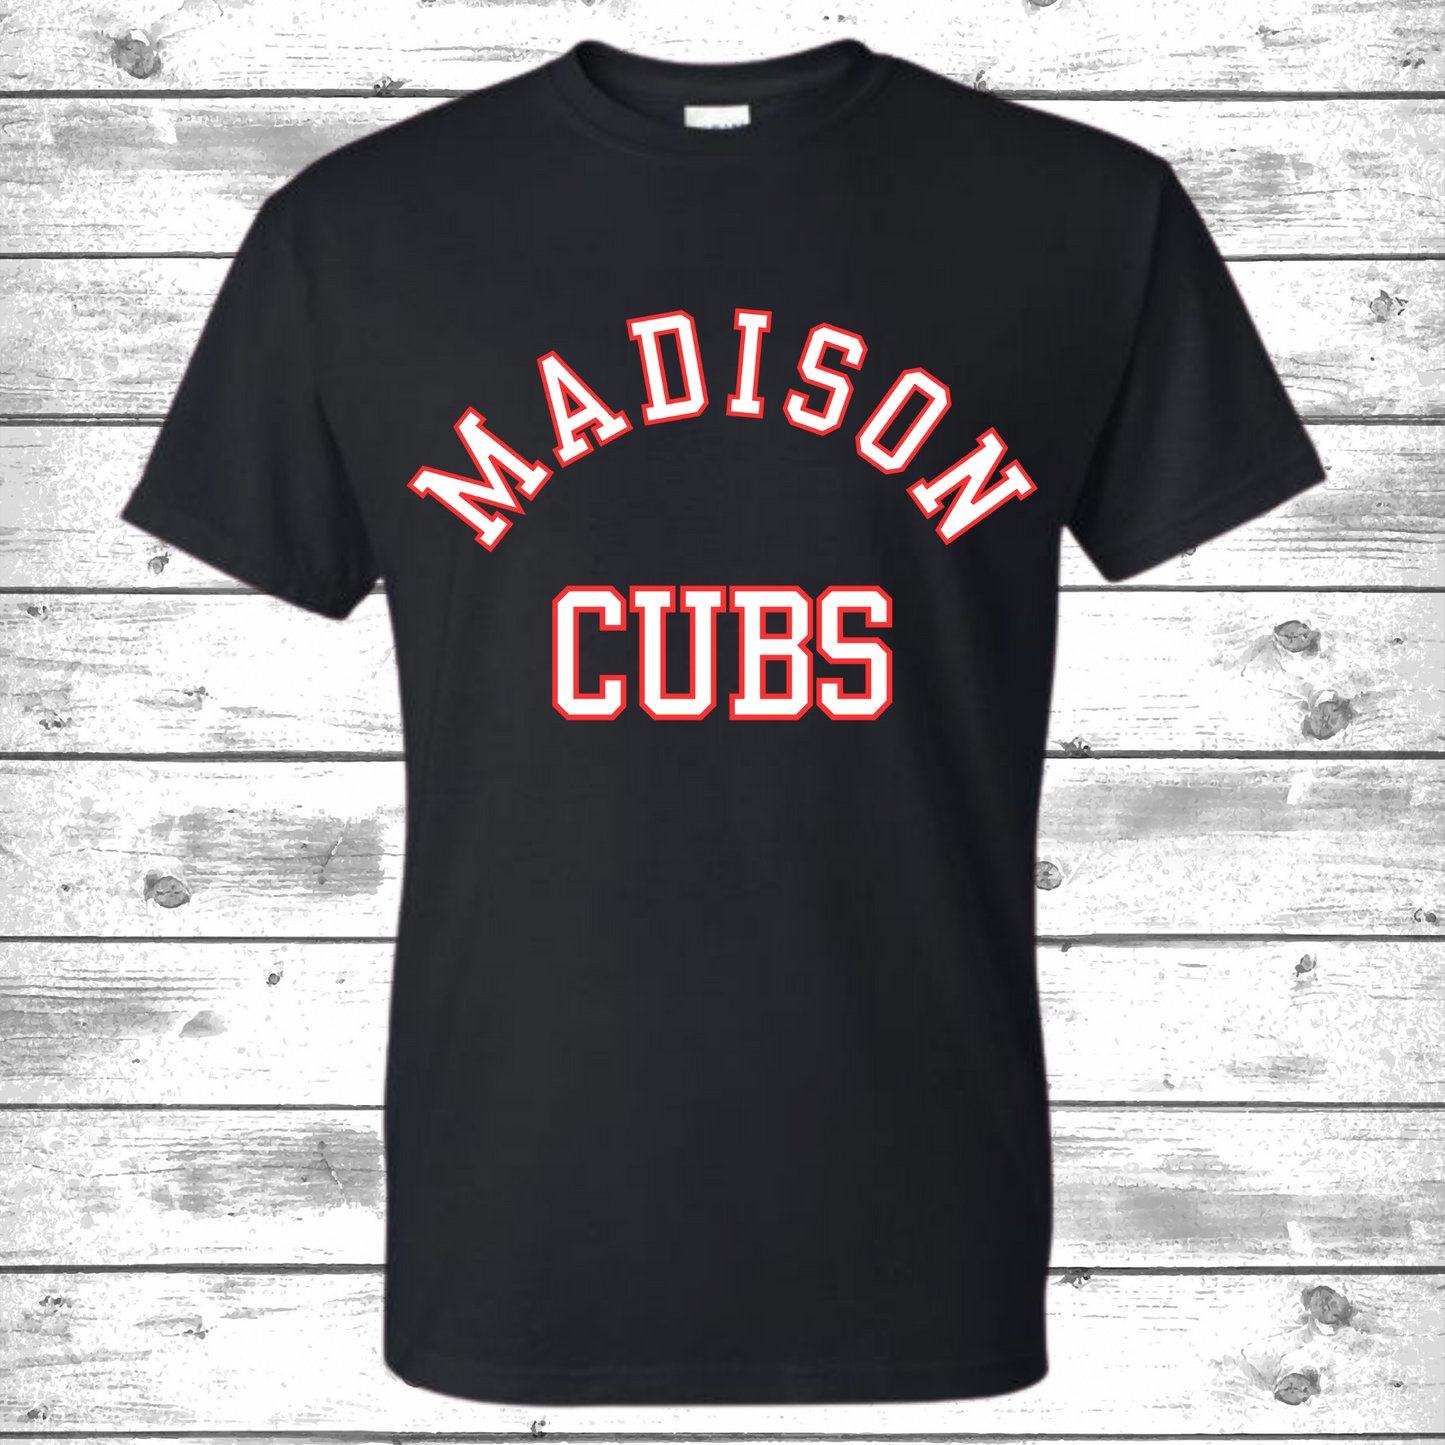 Madison Cubs.5